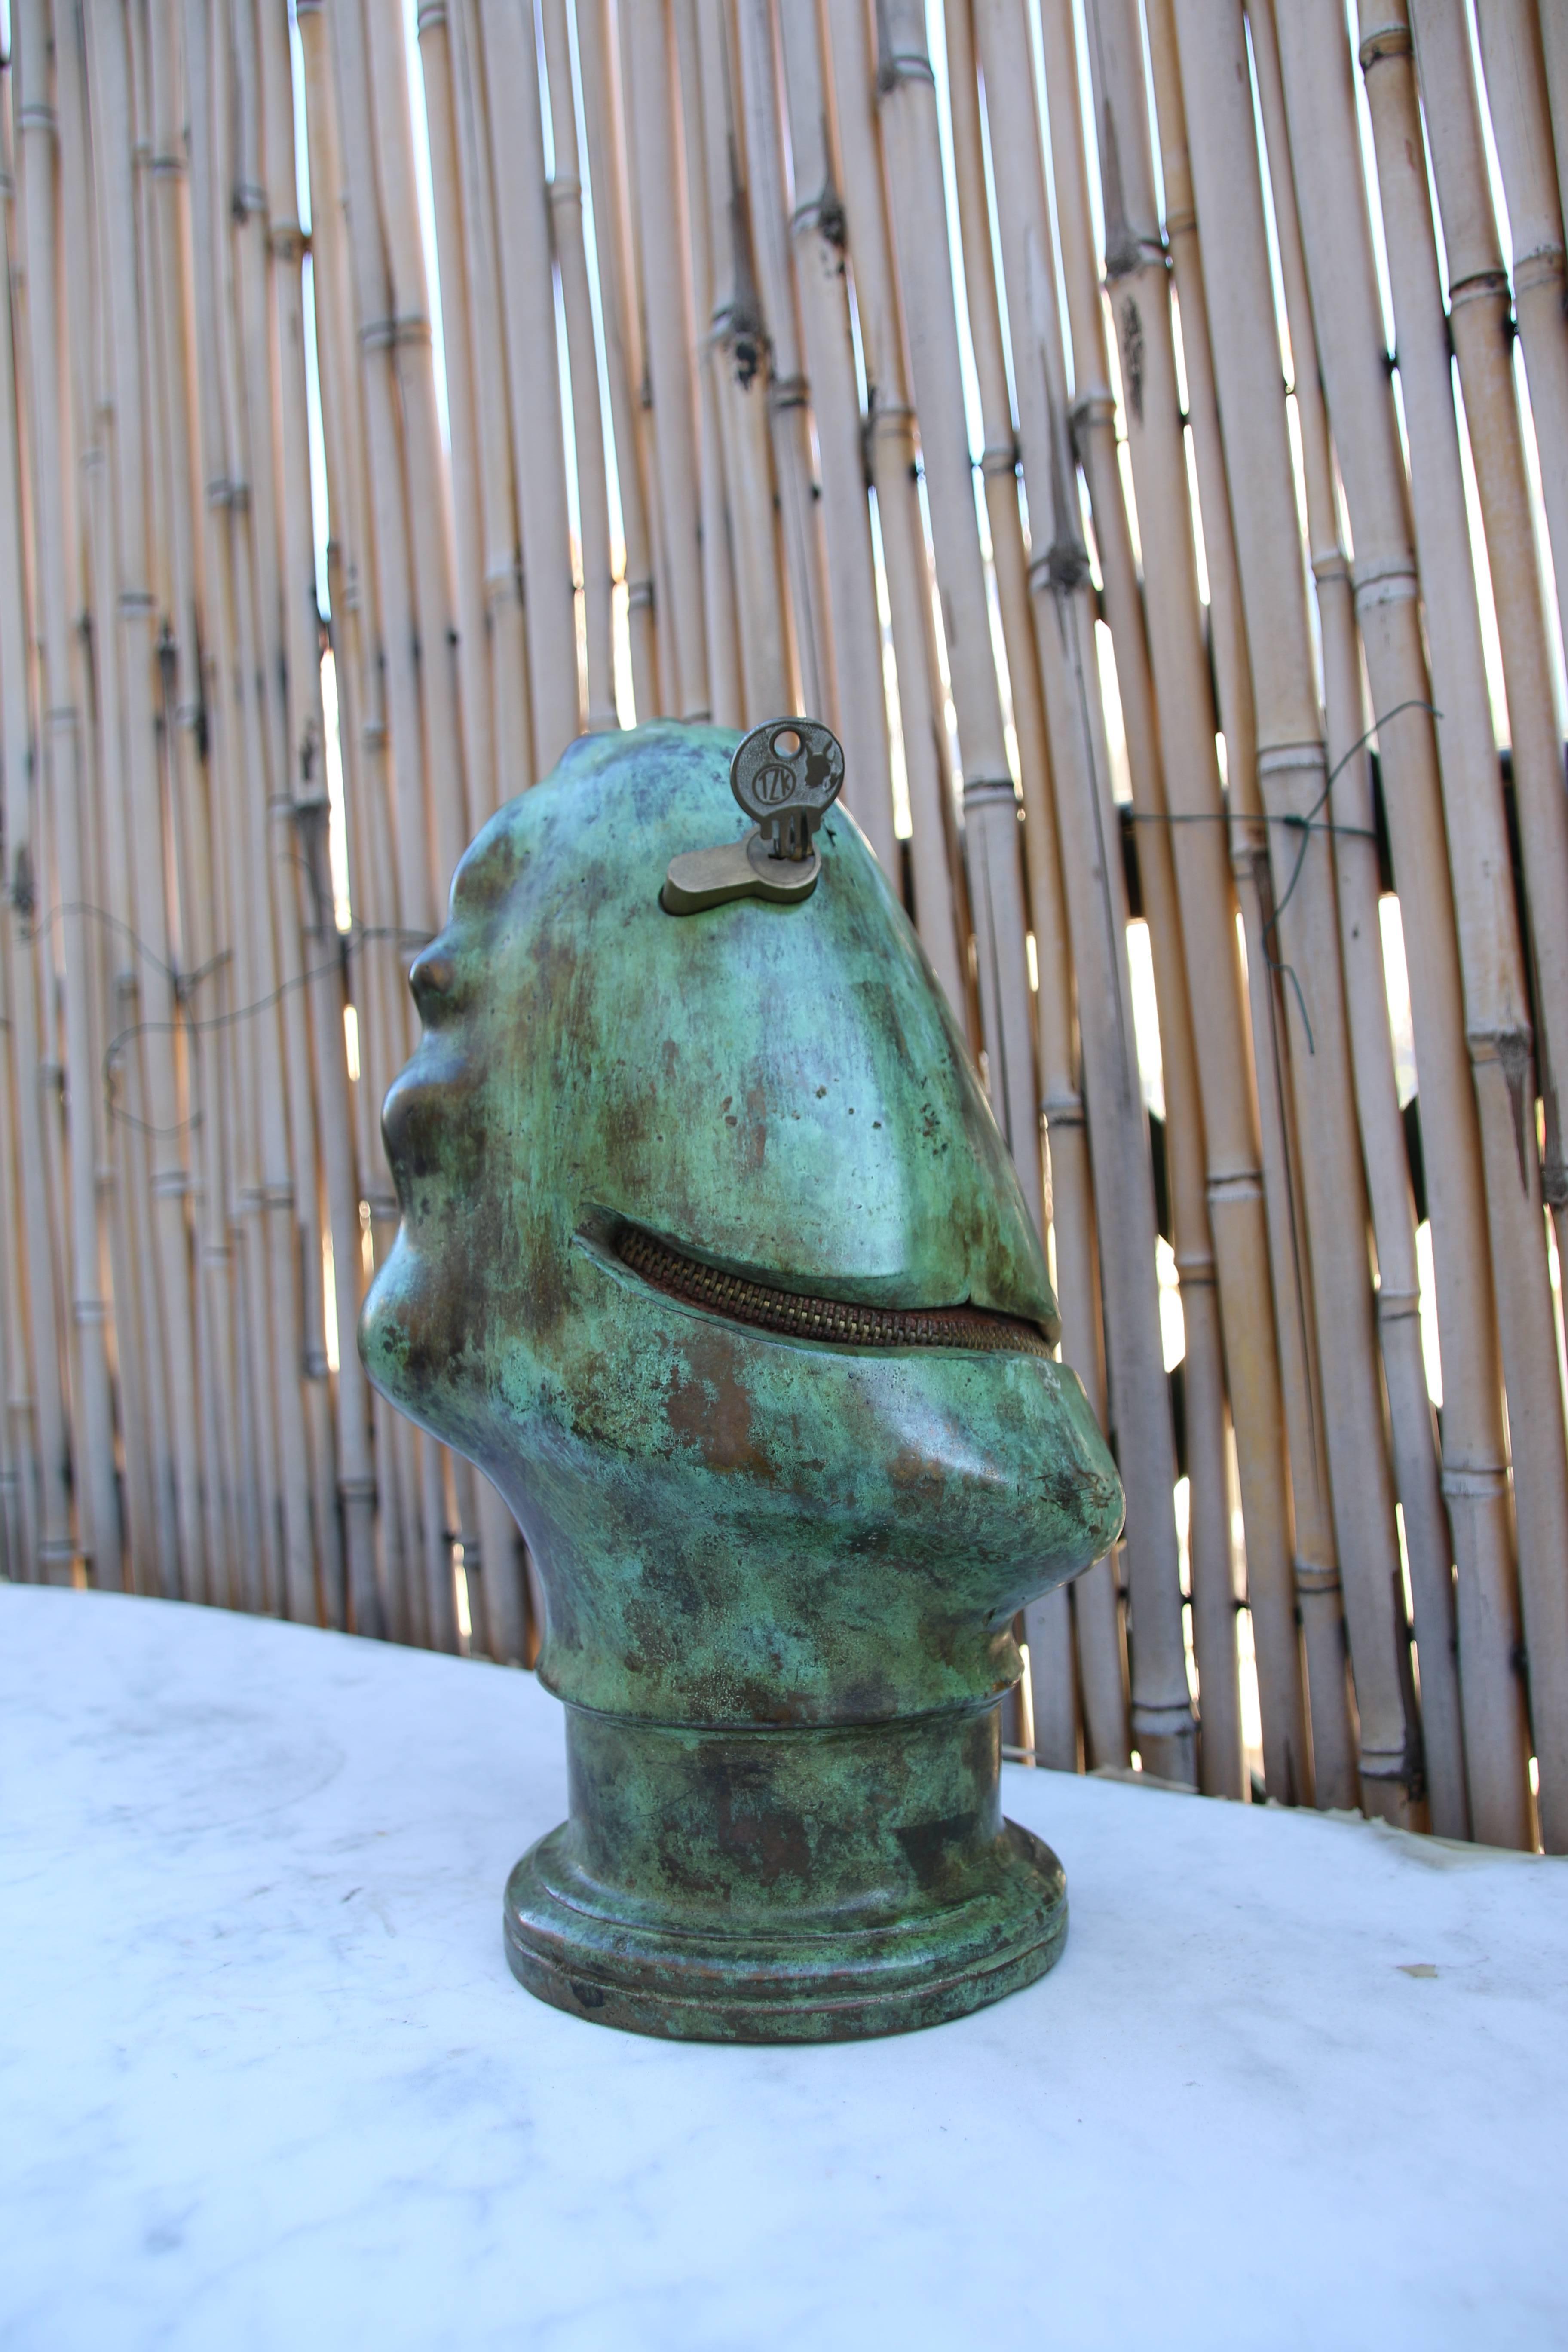 Unknown artist
Bronze sculpture with green patina